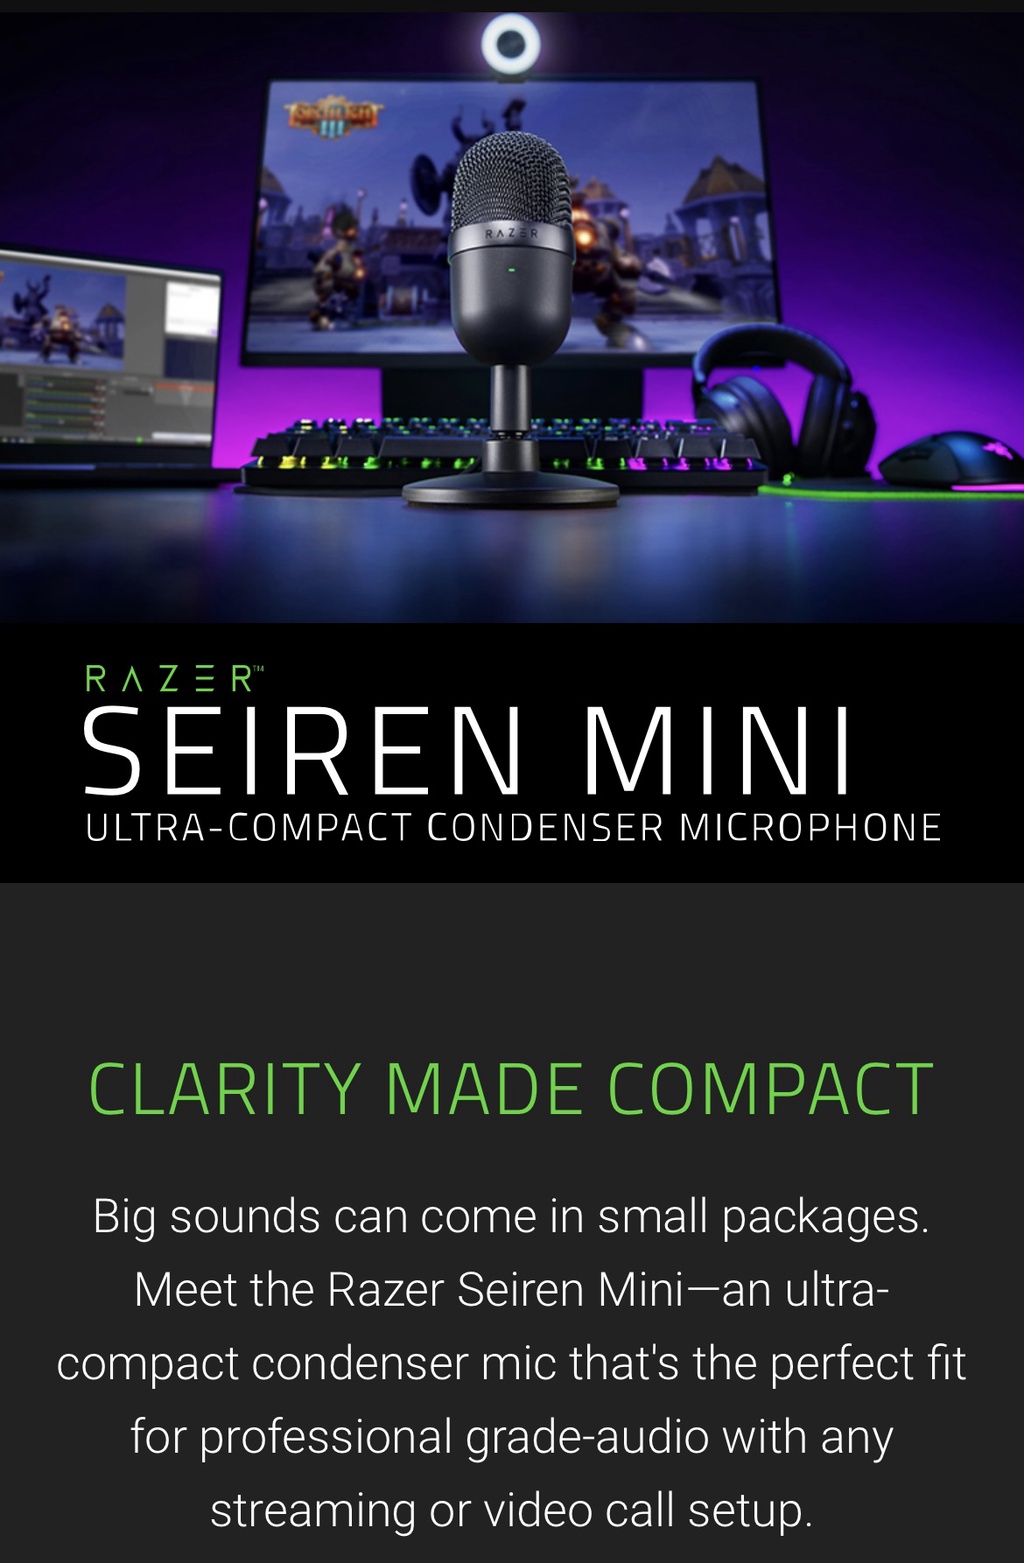 Razer Seiren Mini - Black / Mercury / Quartz — Razer Flagship Store